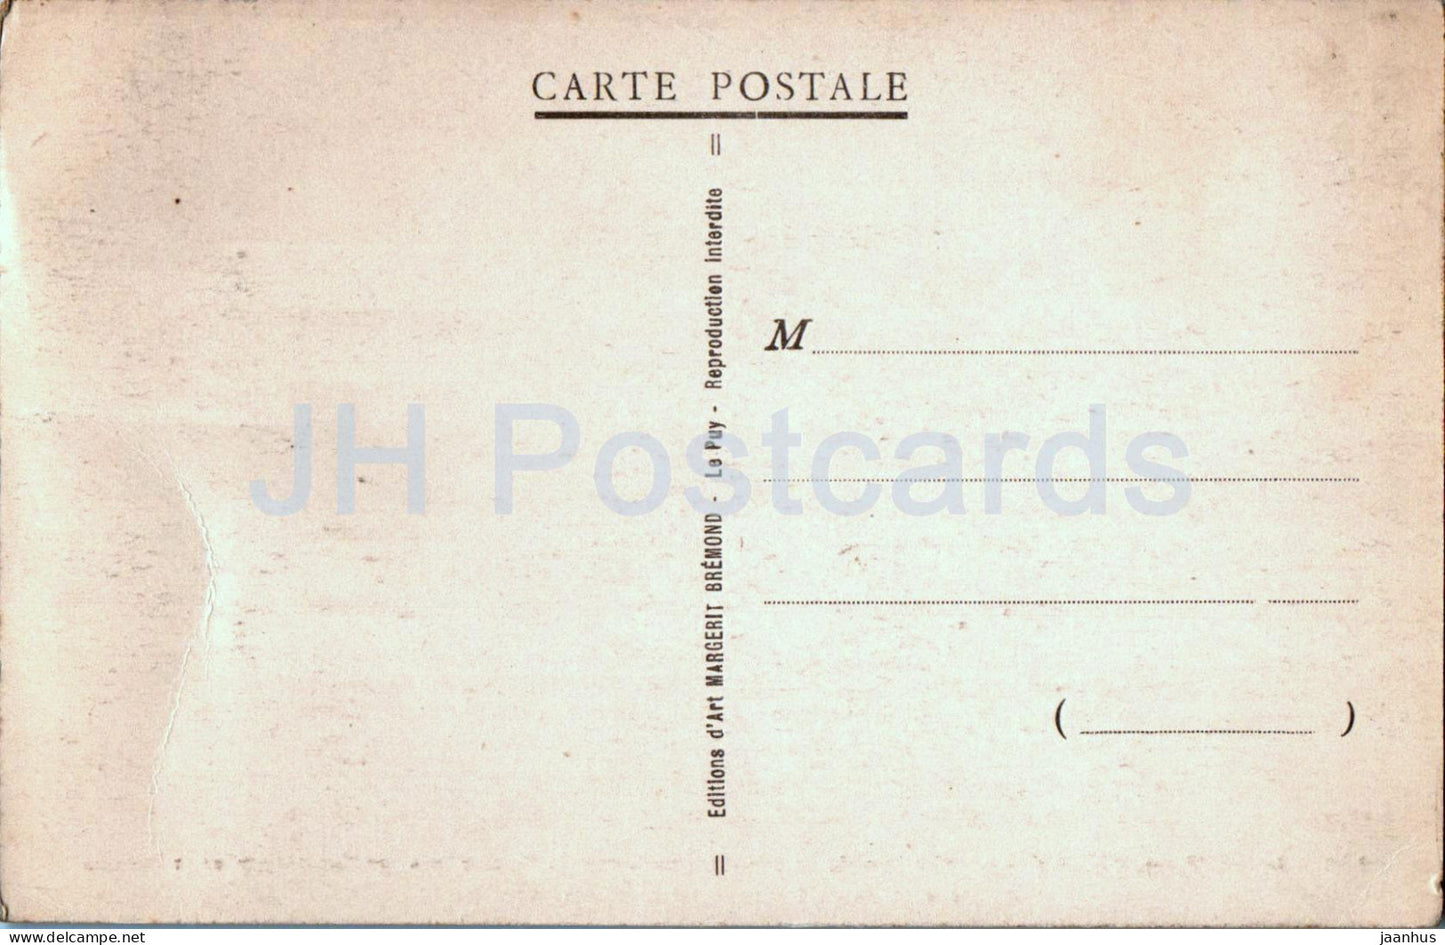 Le Puy en Velay - Le Viaduc de la Chartreuse sur la Borne - viaduct - railway - 1128 - old postcard - France - unused